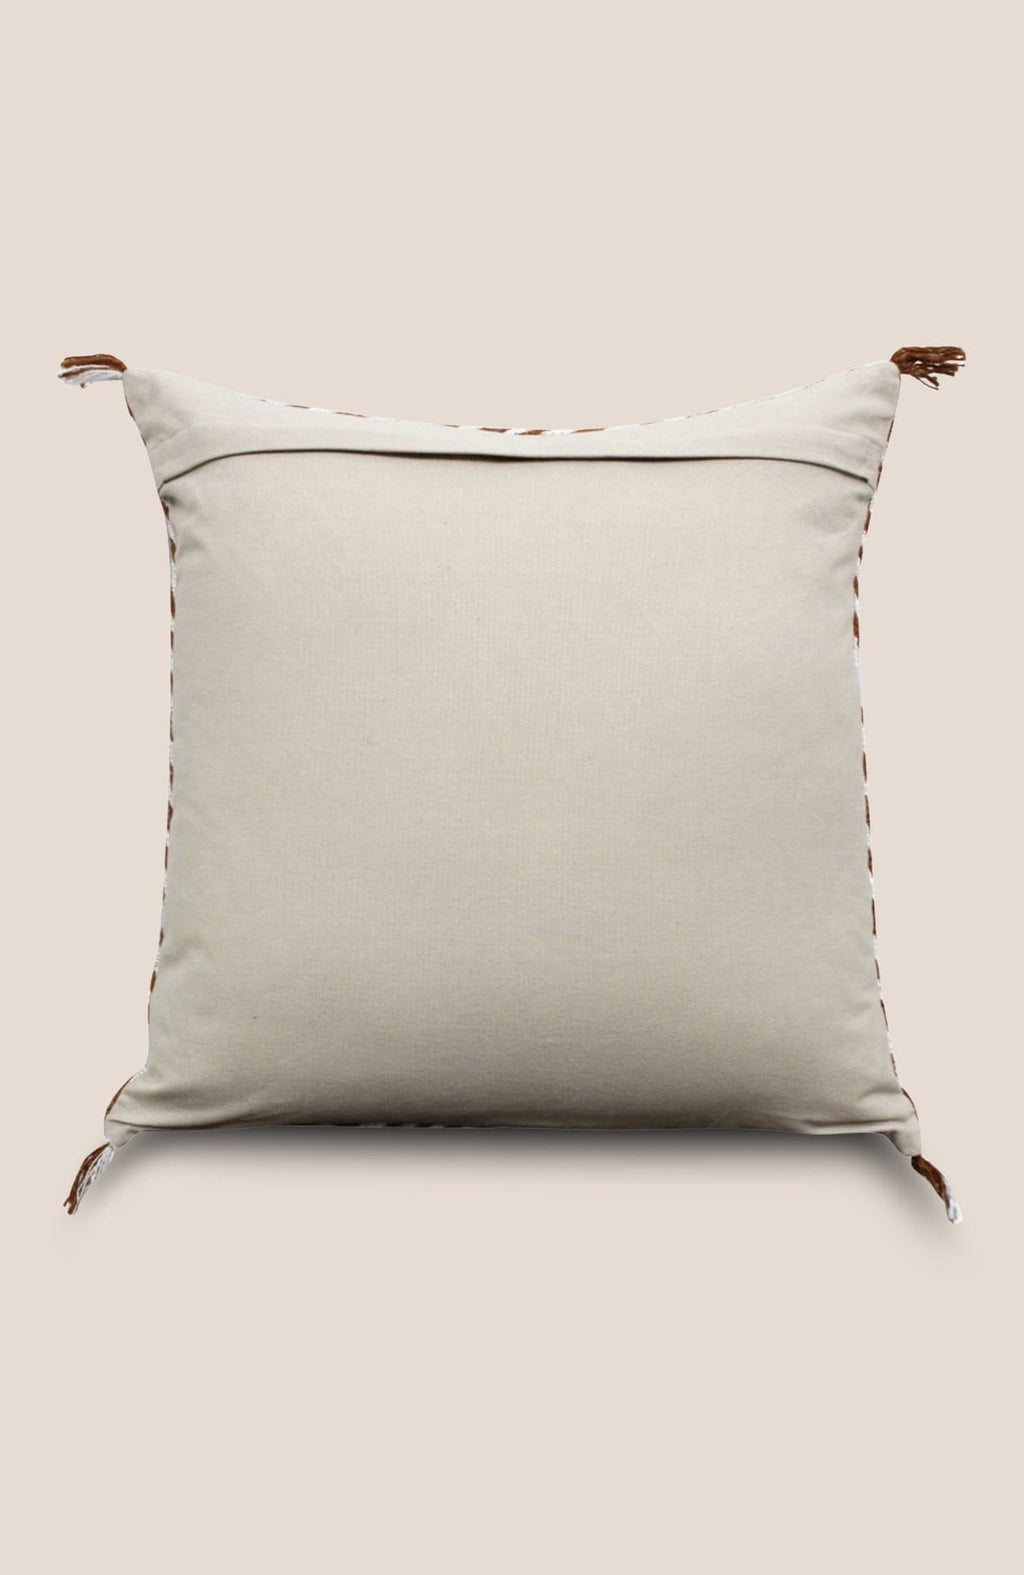 Sabra Pillow Cover Rah - Home Decor | Shop Baskets, Ceramics, Pillows, Rugs & Wall Hangs online